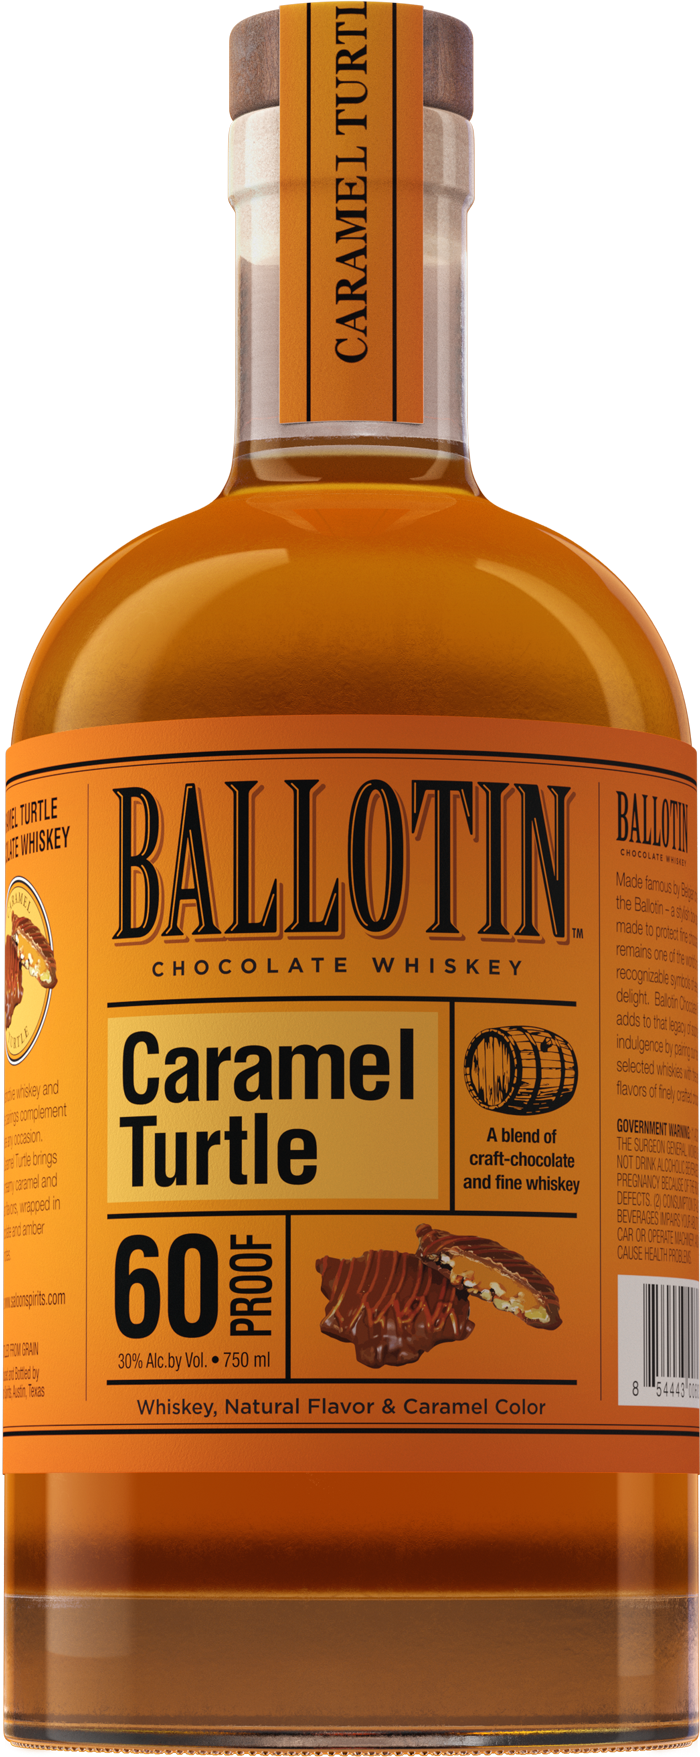 BALLOTIN CARAMEL TURTLE WHSKY Flavored Whiskey BeverageWarehouse